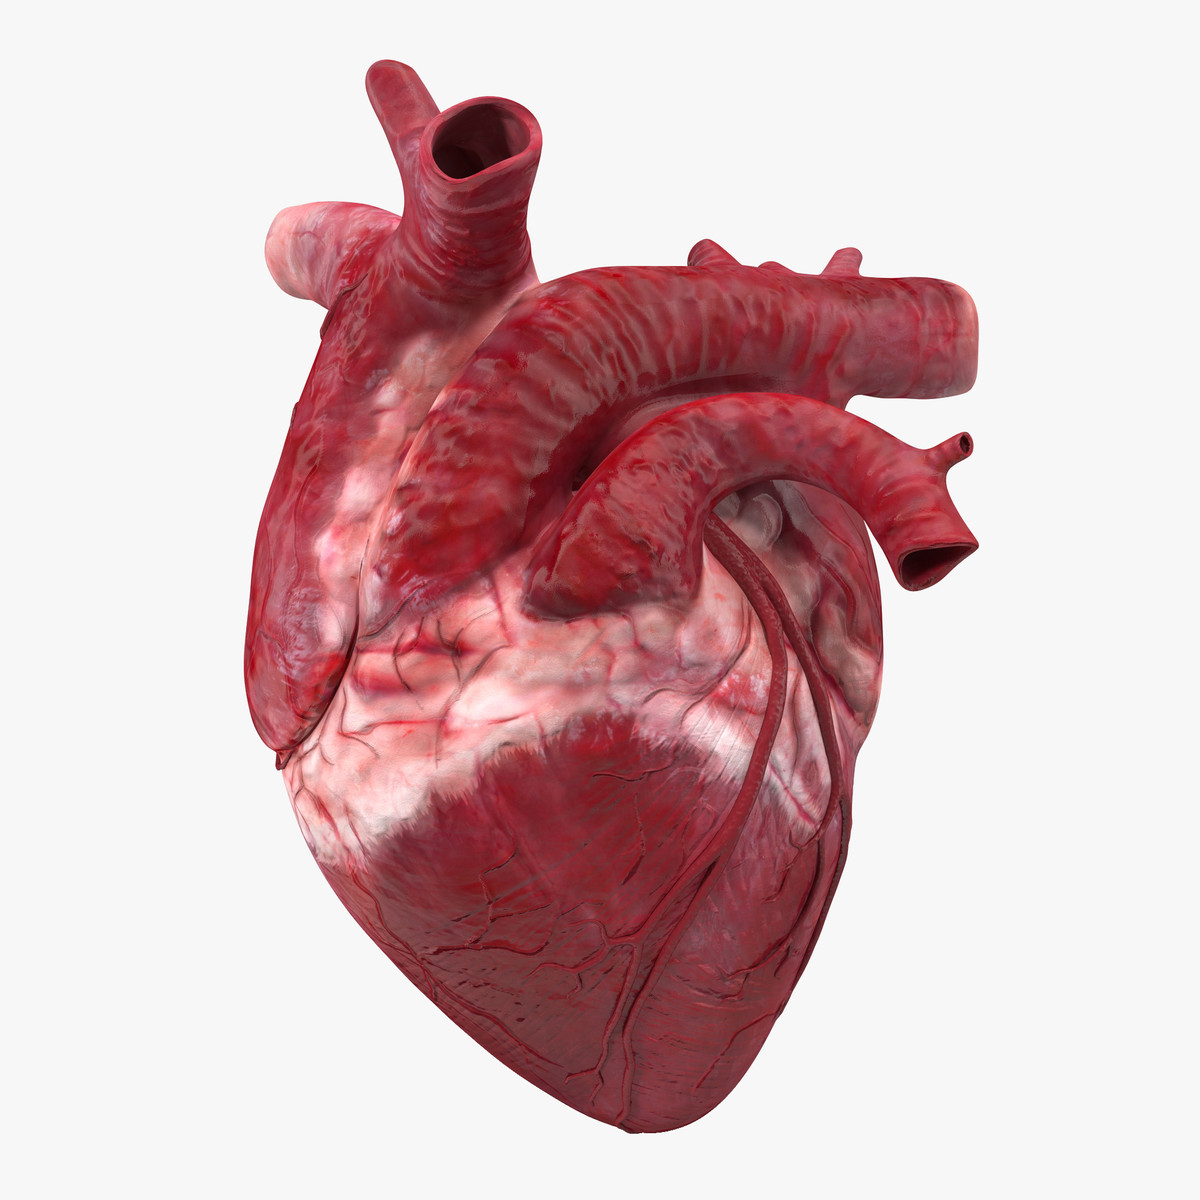 人間の心の壁紙,手,人体解剖学,肉,心臓,人間